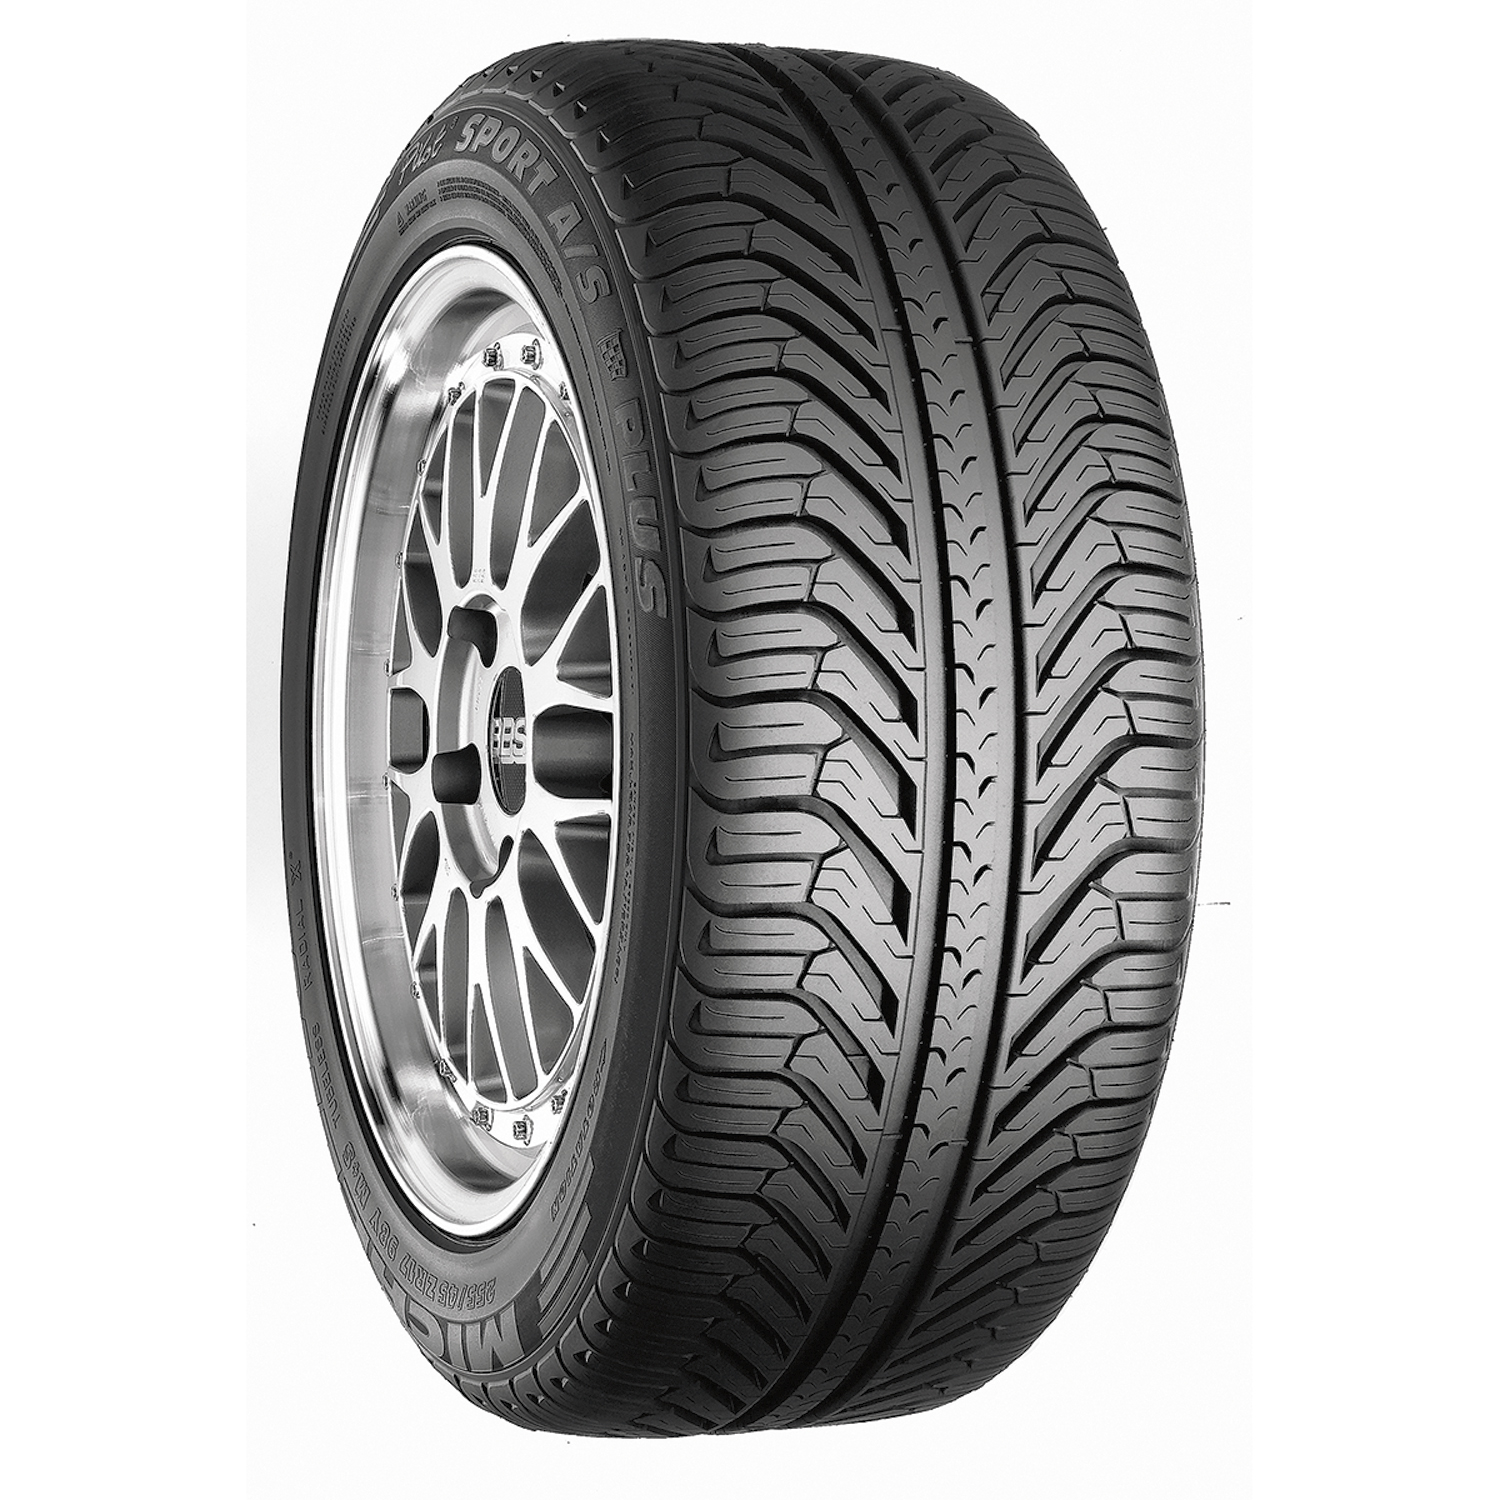 Michelin Pilot Sport A/S Plus - 285/30ZR18 97Y - All Season Tire